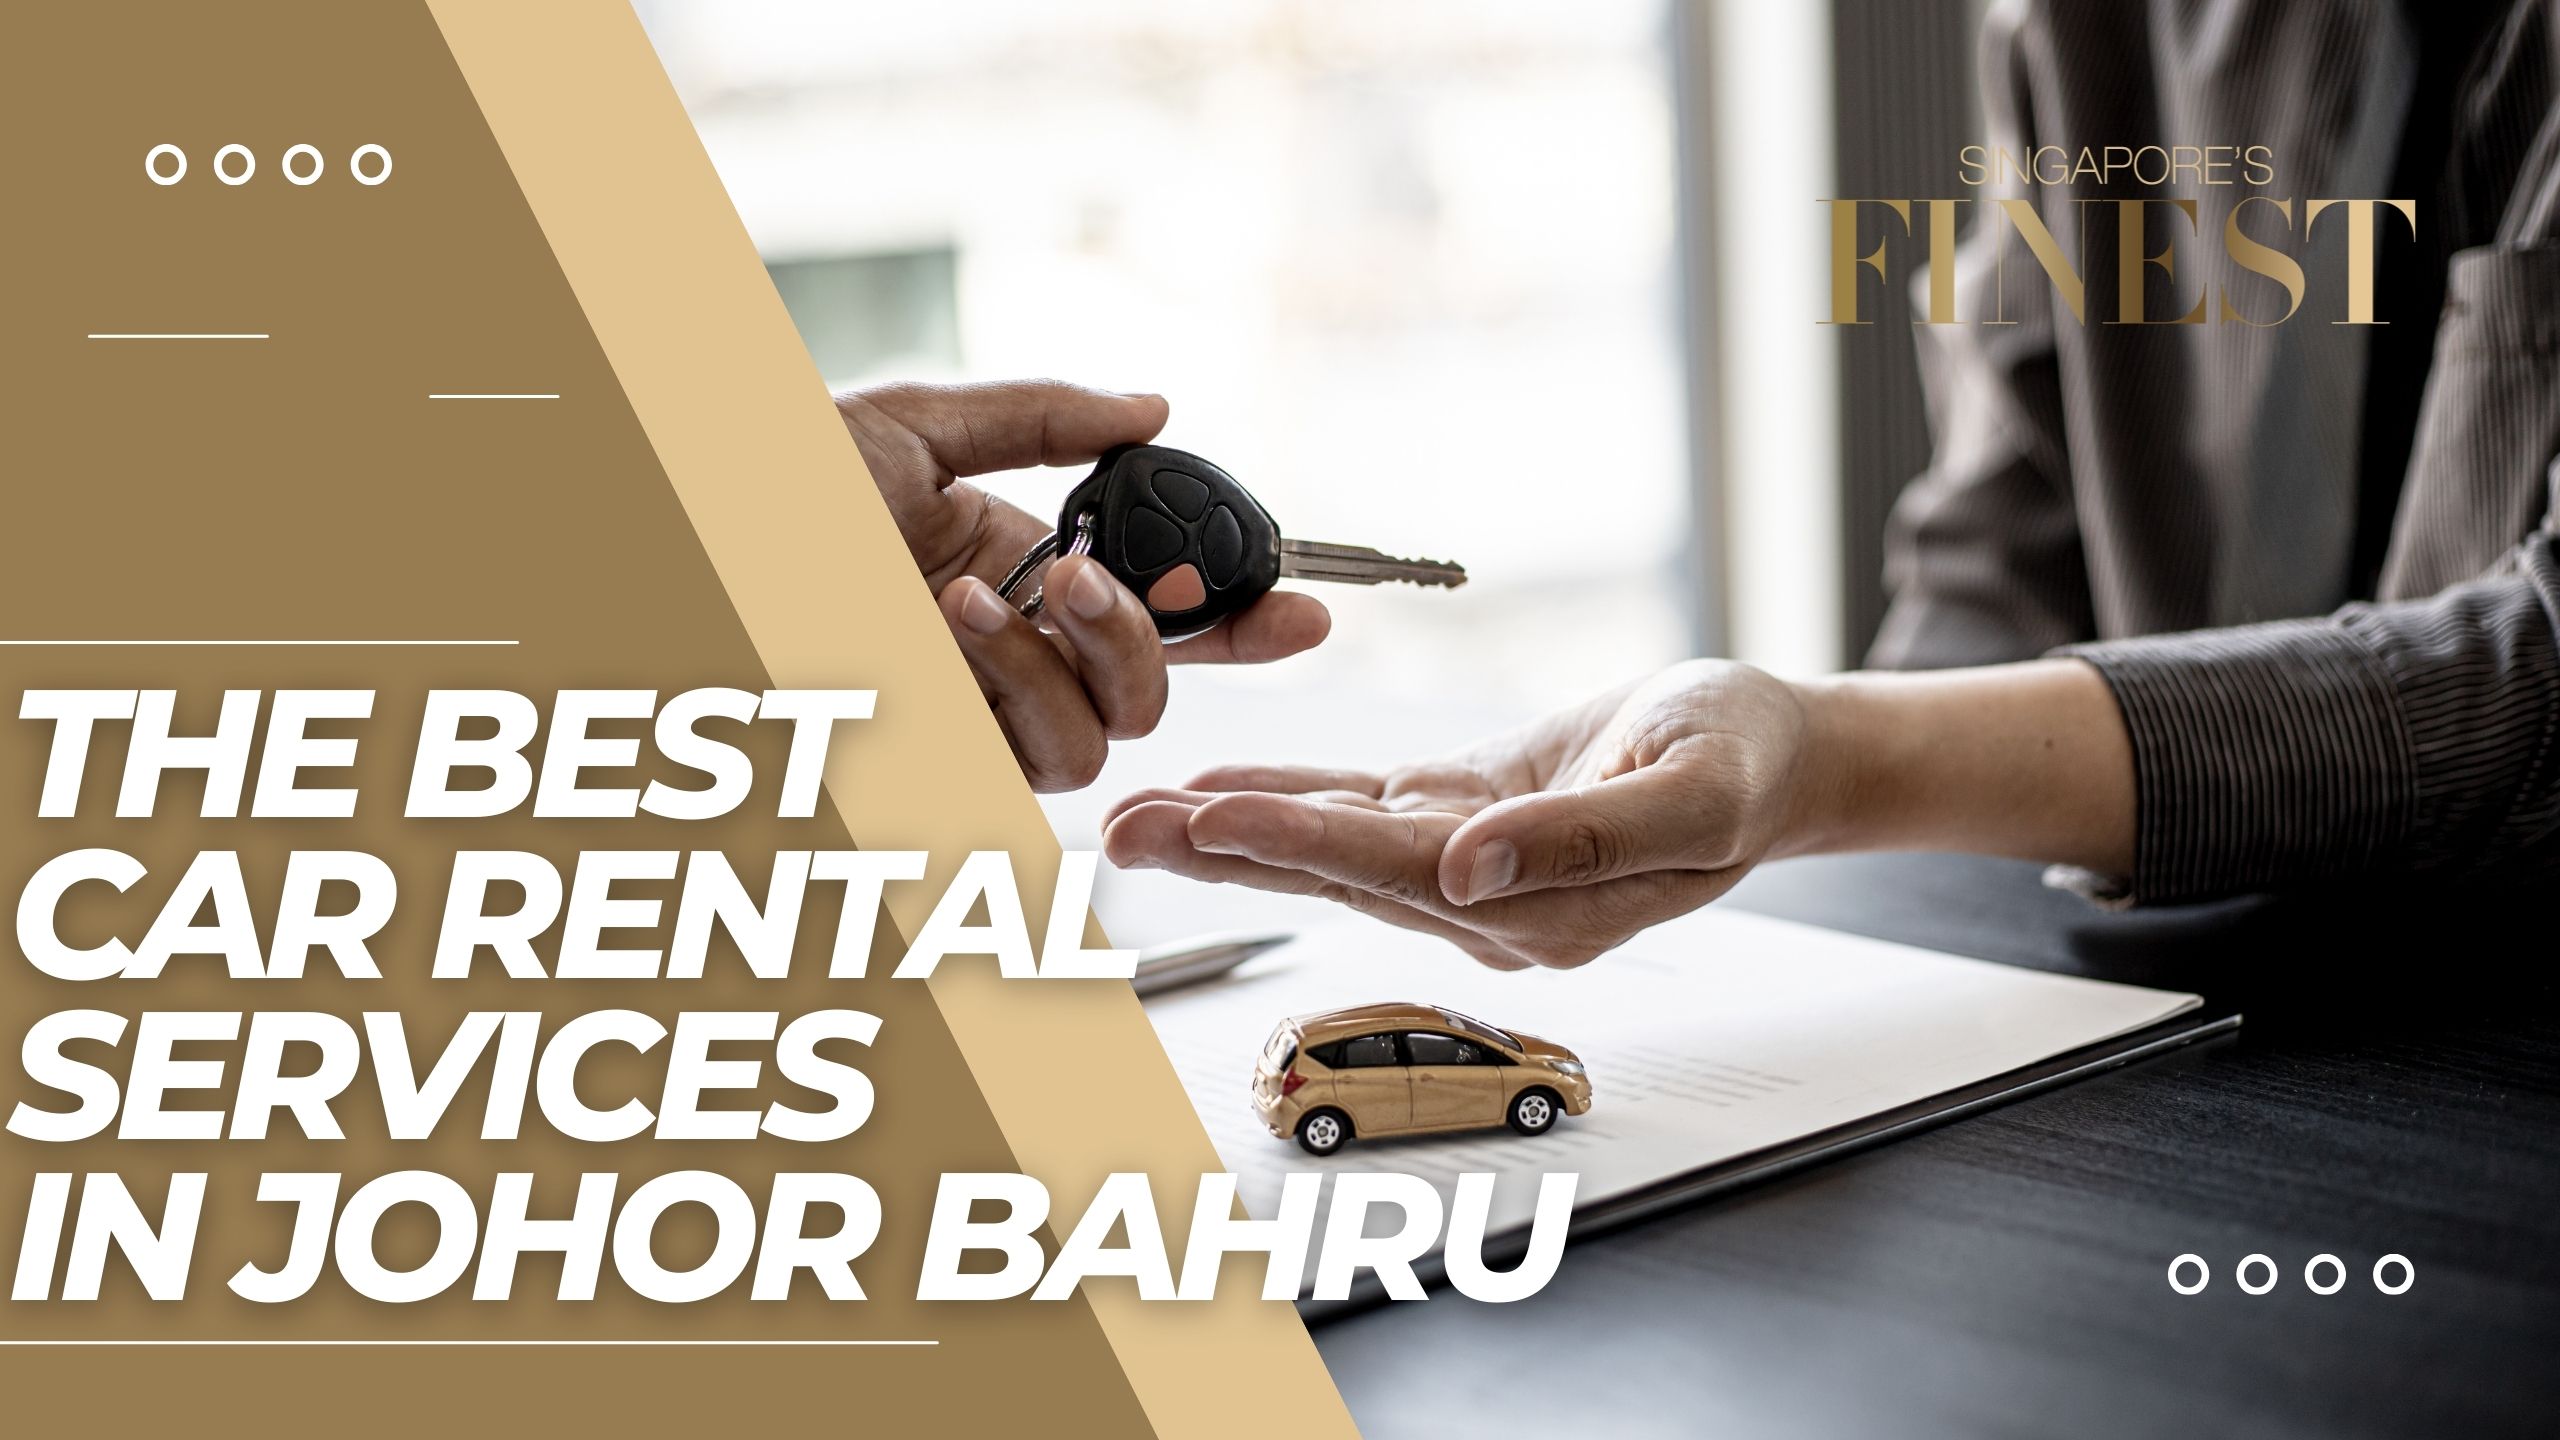 The Finest Car Rental Services in Johor Bahru